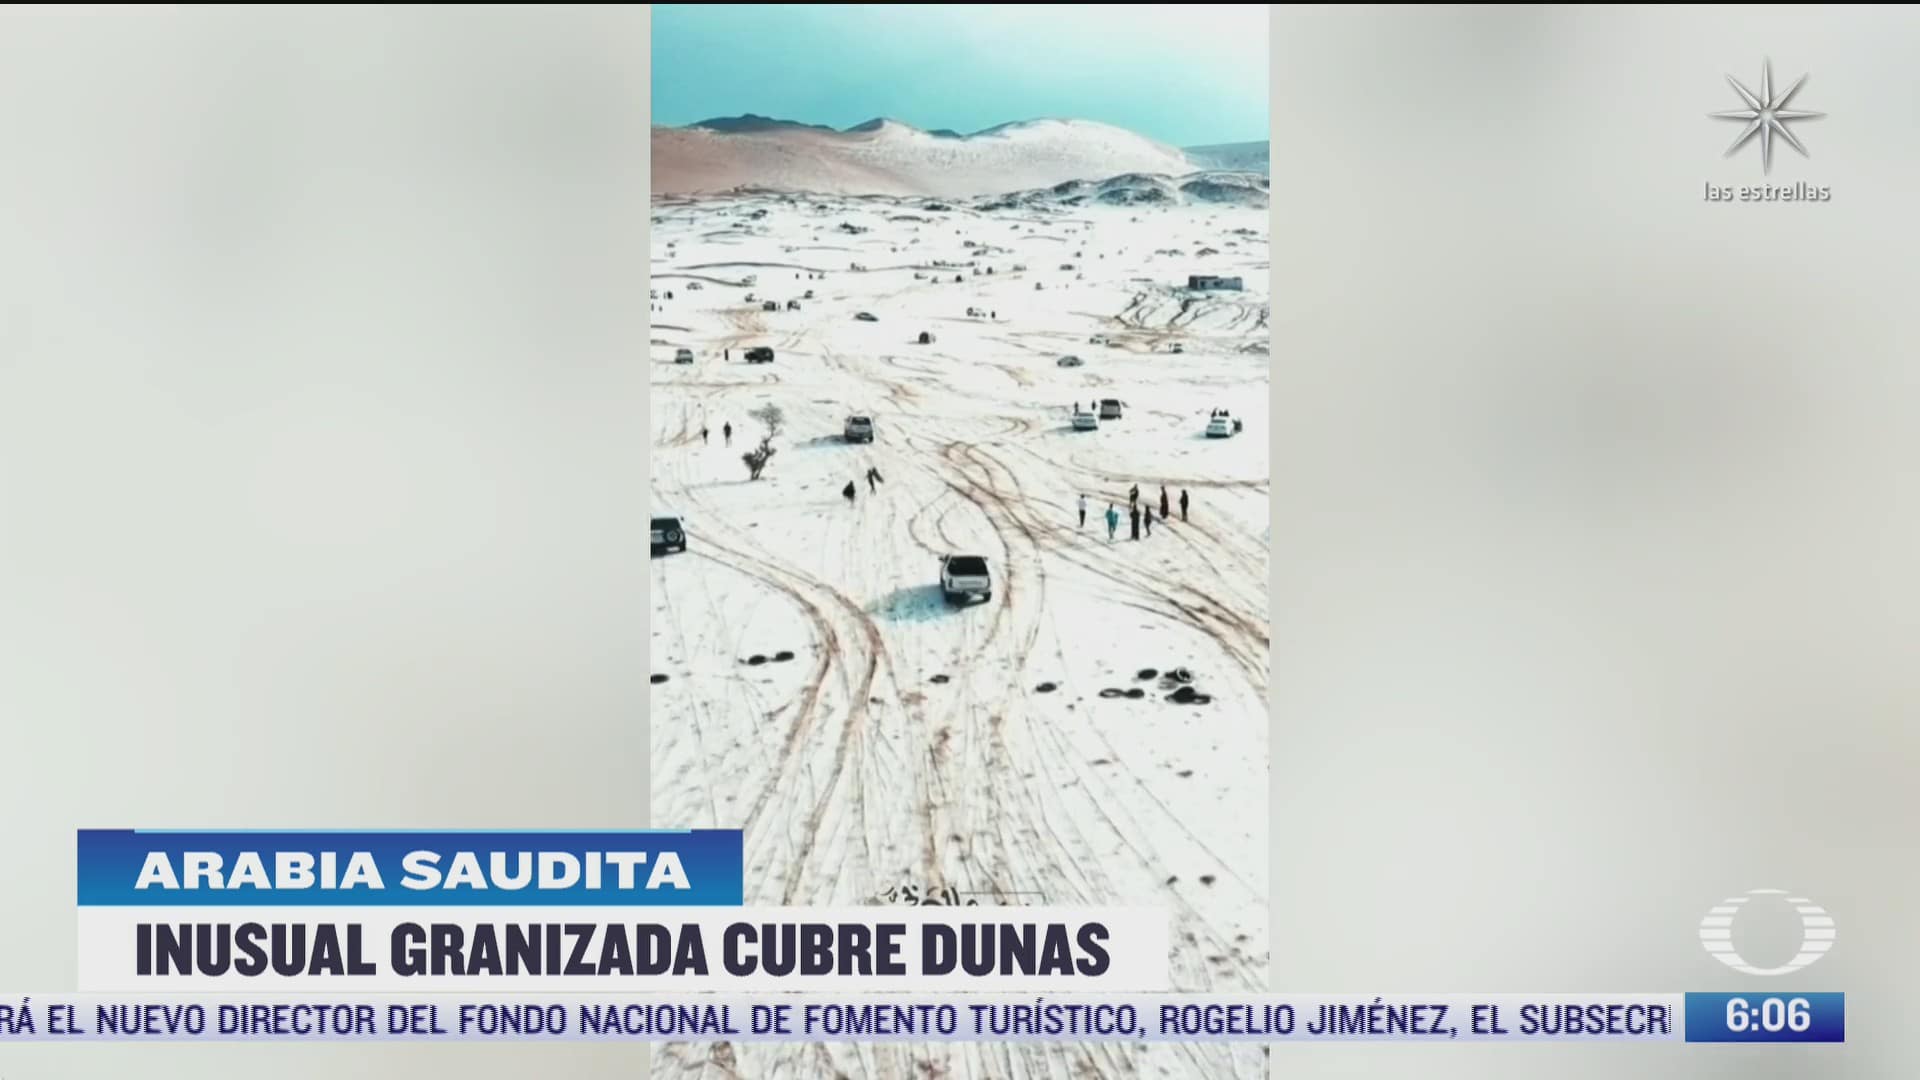 granizada deja dunas cubiertas de nieve en arabia saudita